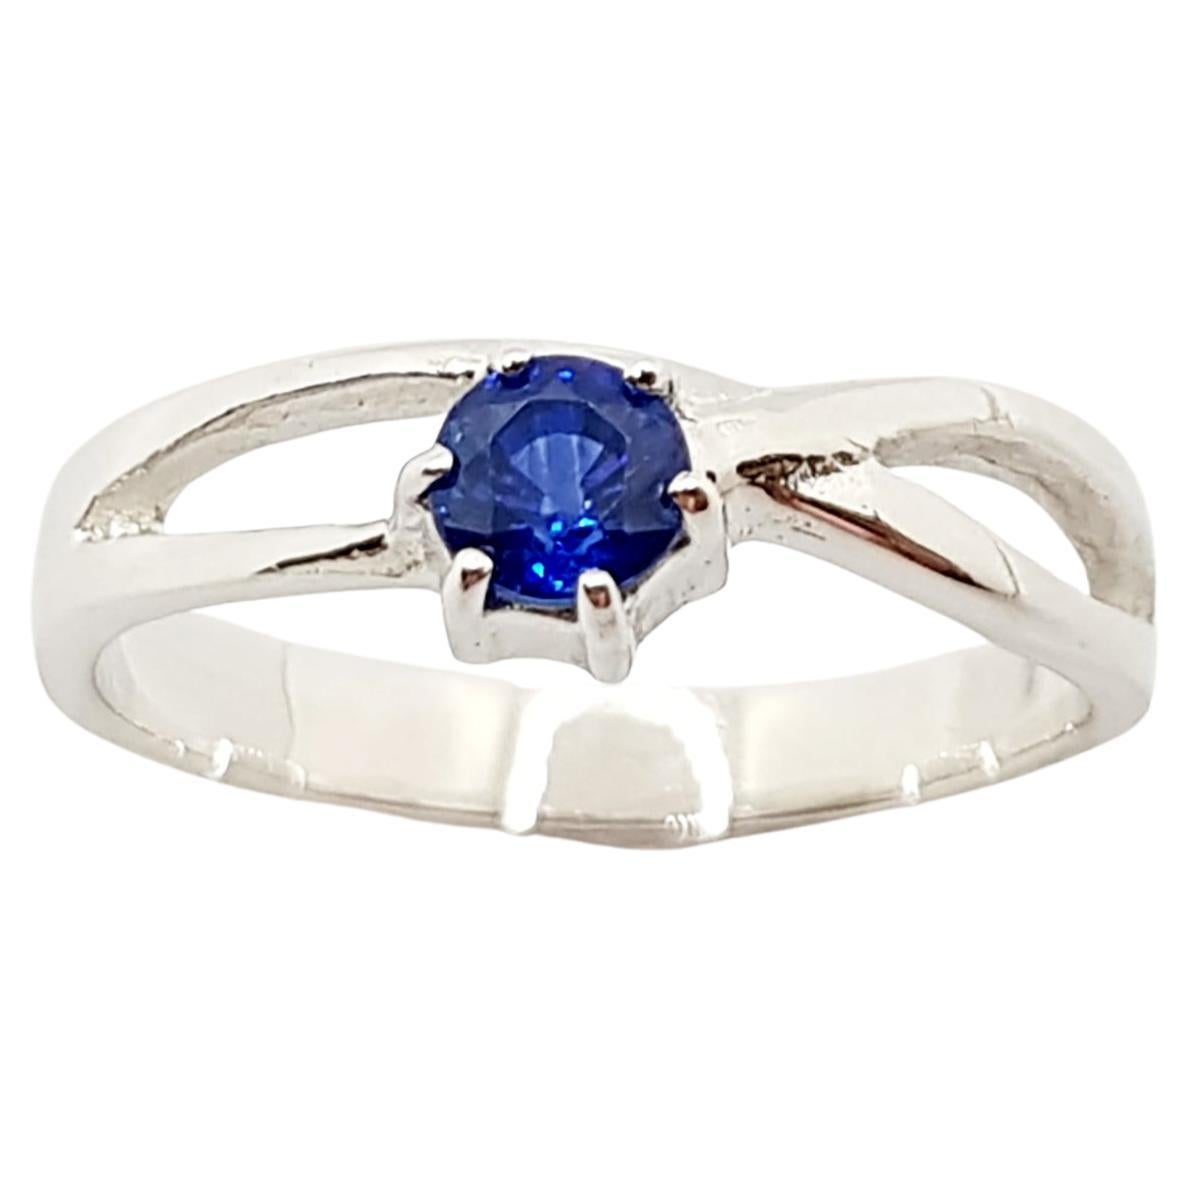 Blue Sapphire Ring set in 18 Karat White Gold Settings